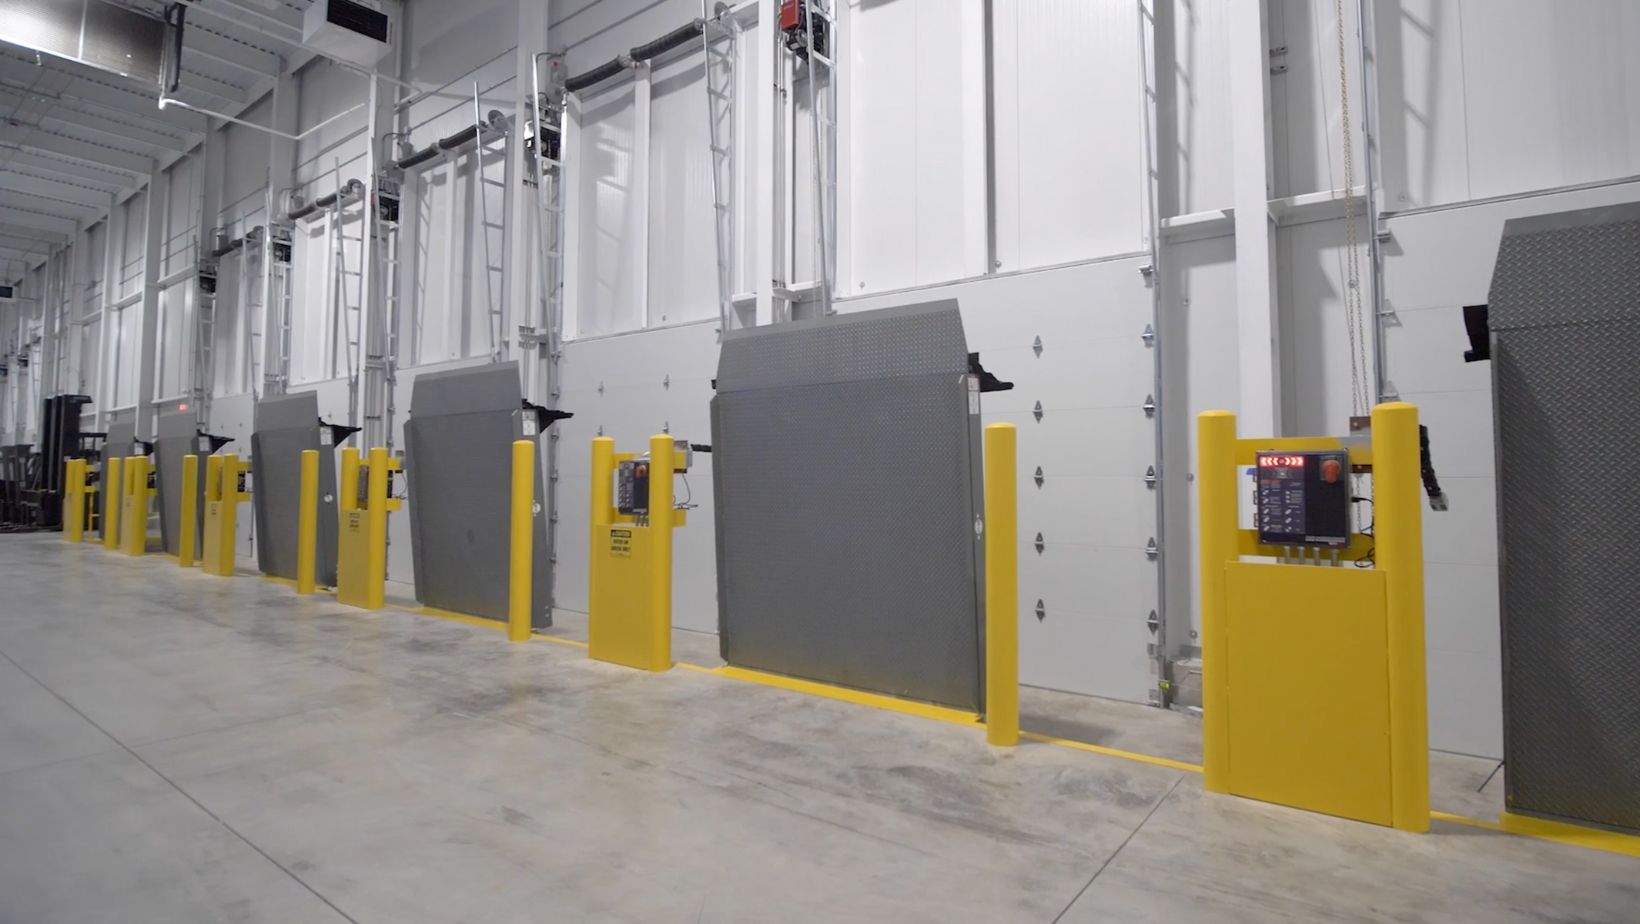 Image of loading docks at cold storage warehouse